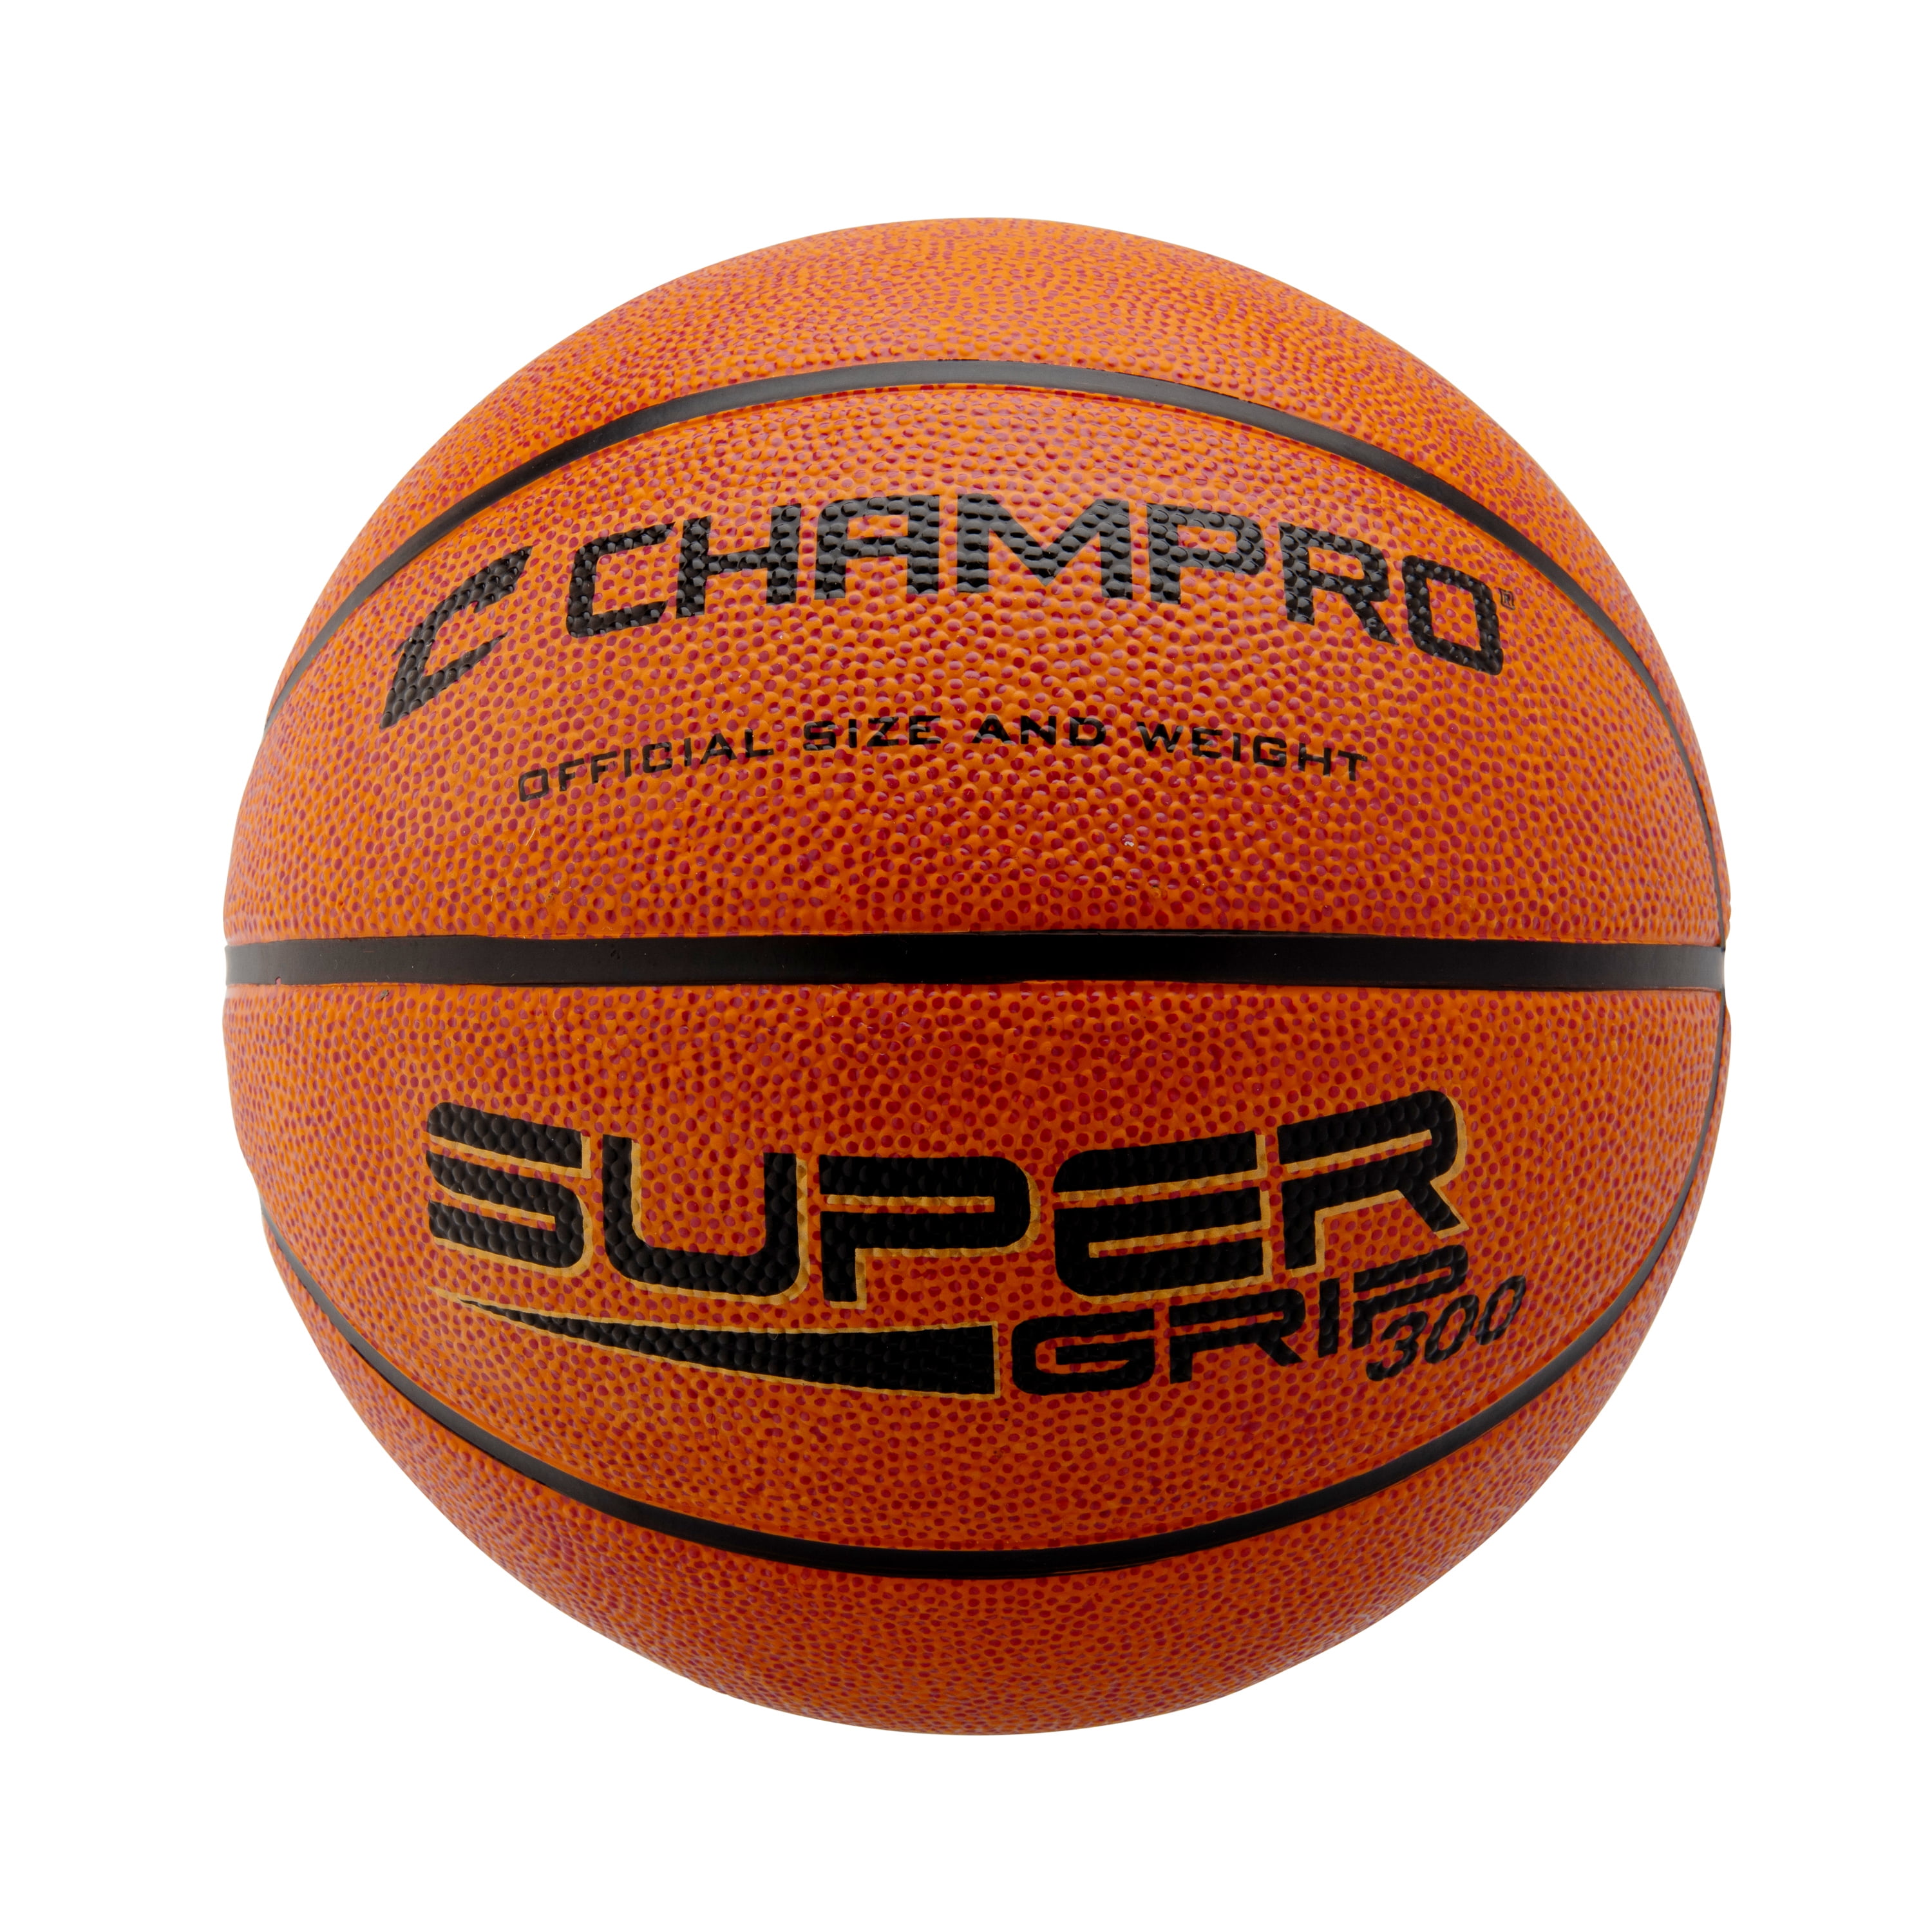 Champro Rubber Basketball 